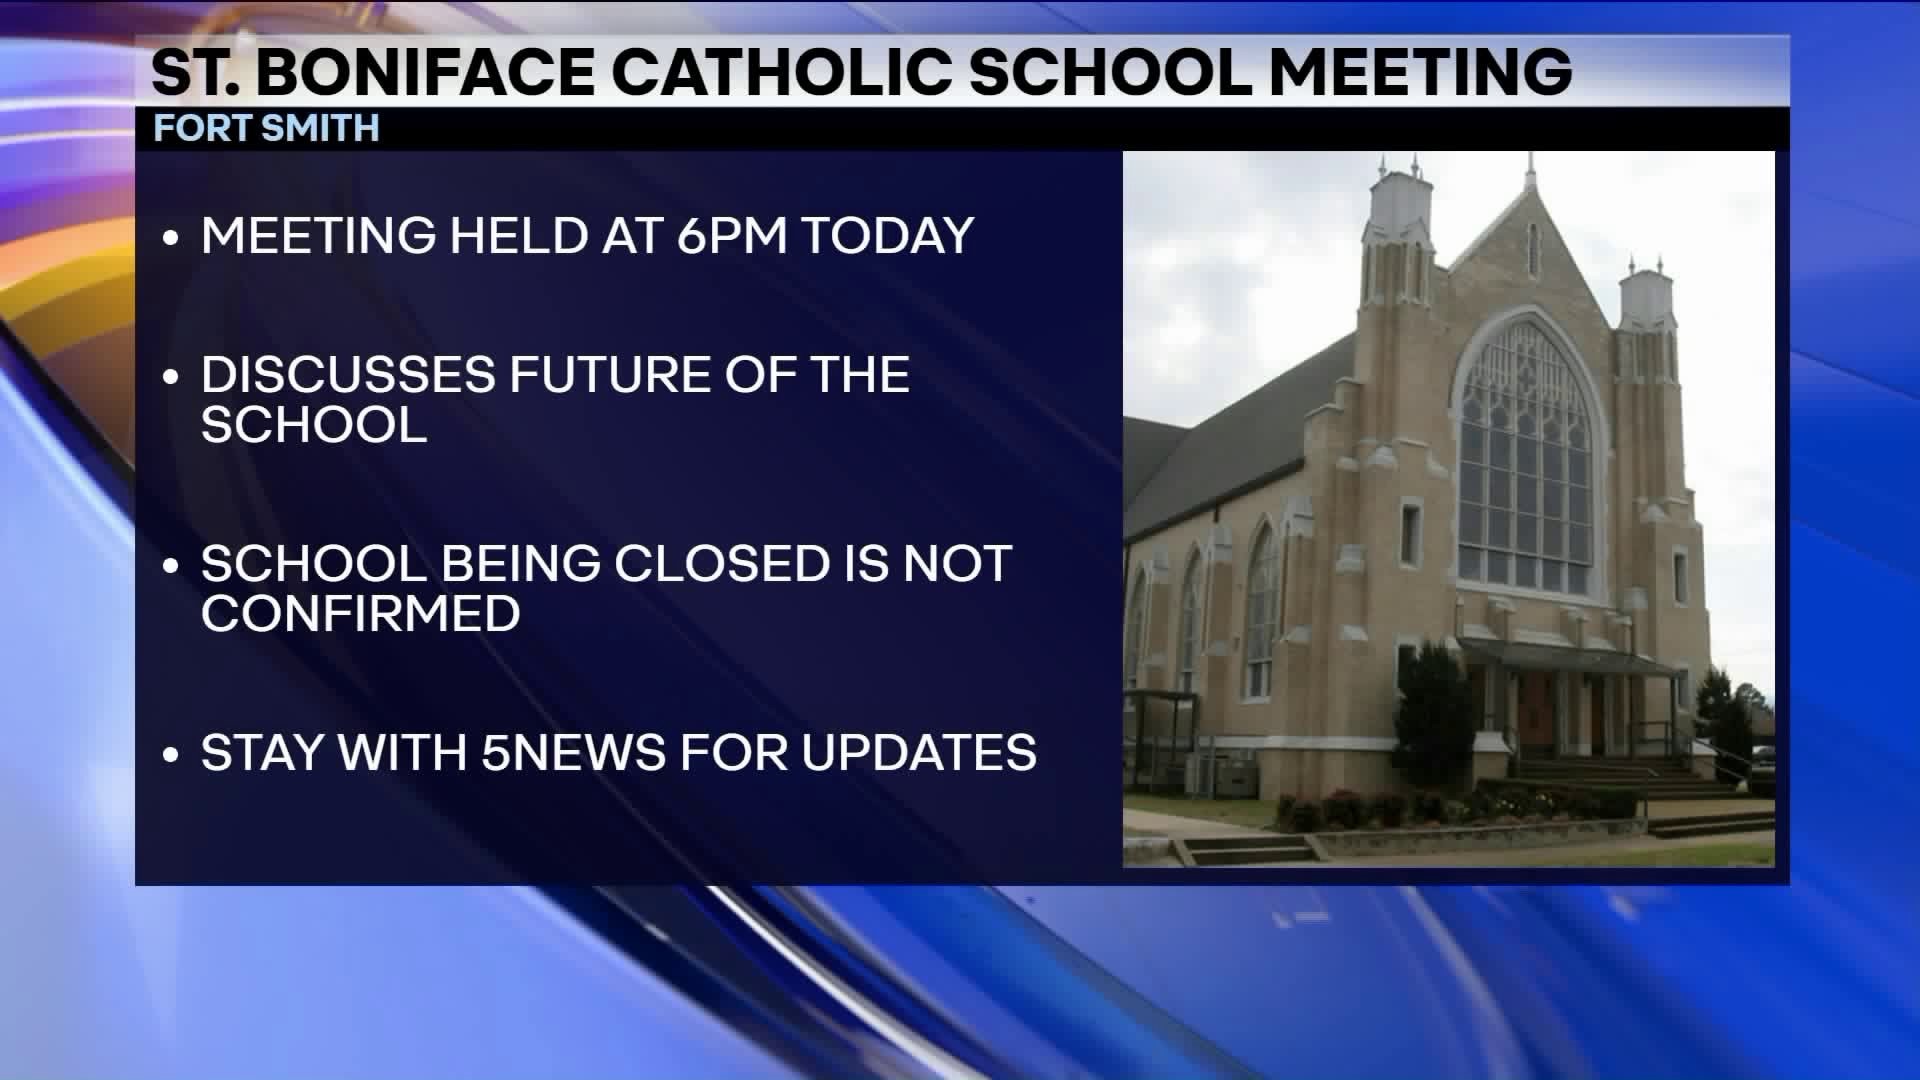 St. Boniface Catholic School Meeting Happening Tonight